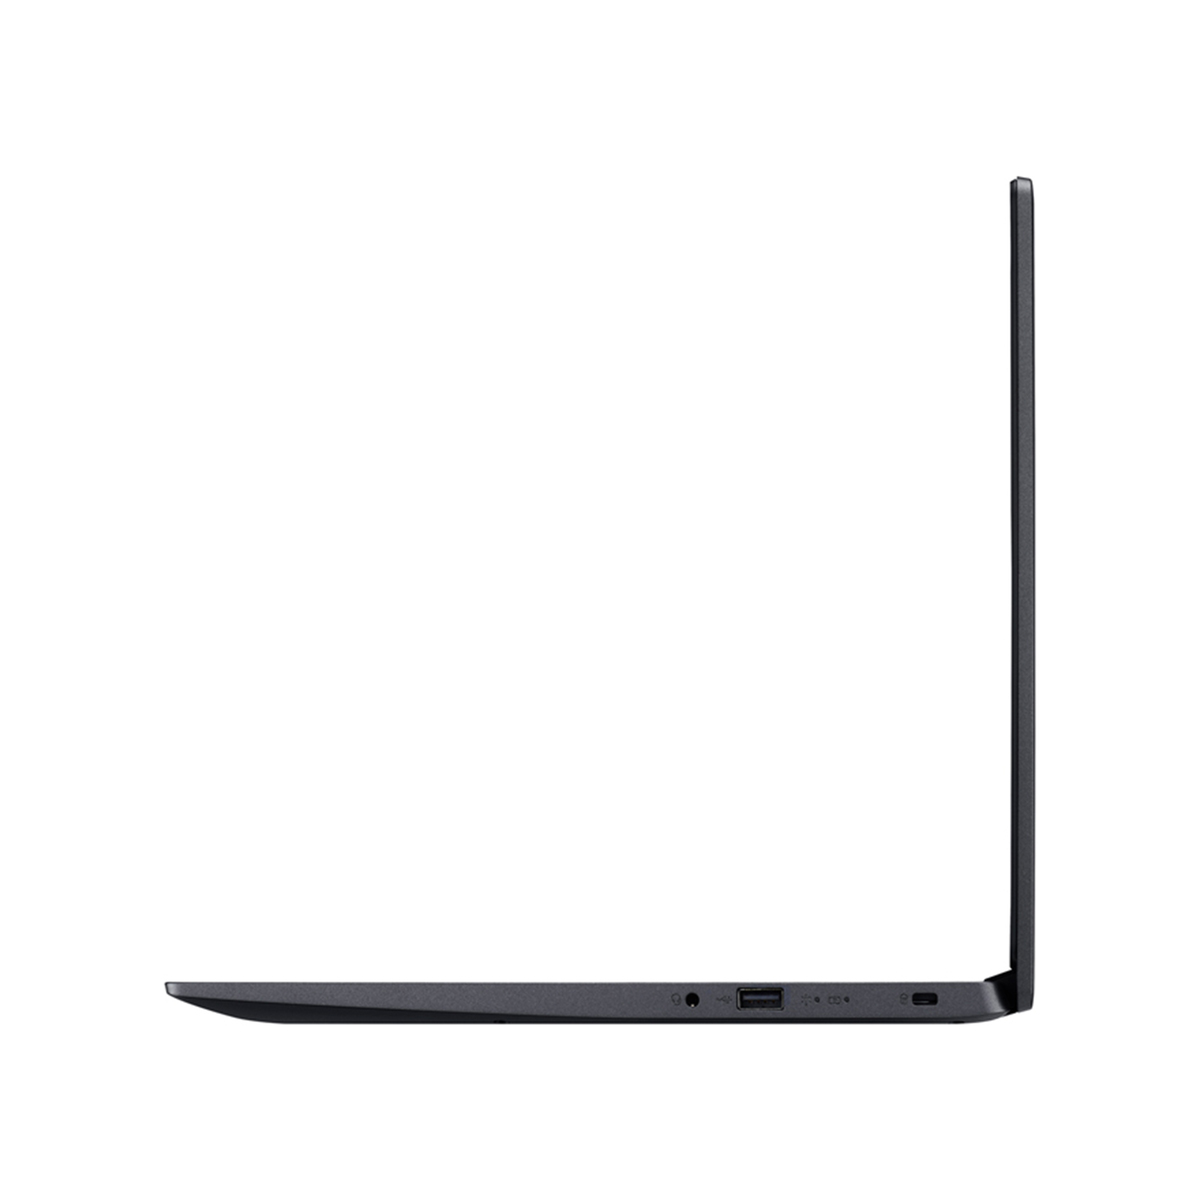 Acer Notebook A3-NX.H9KEM002 Core i3 Black